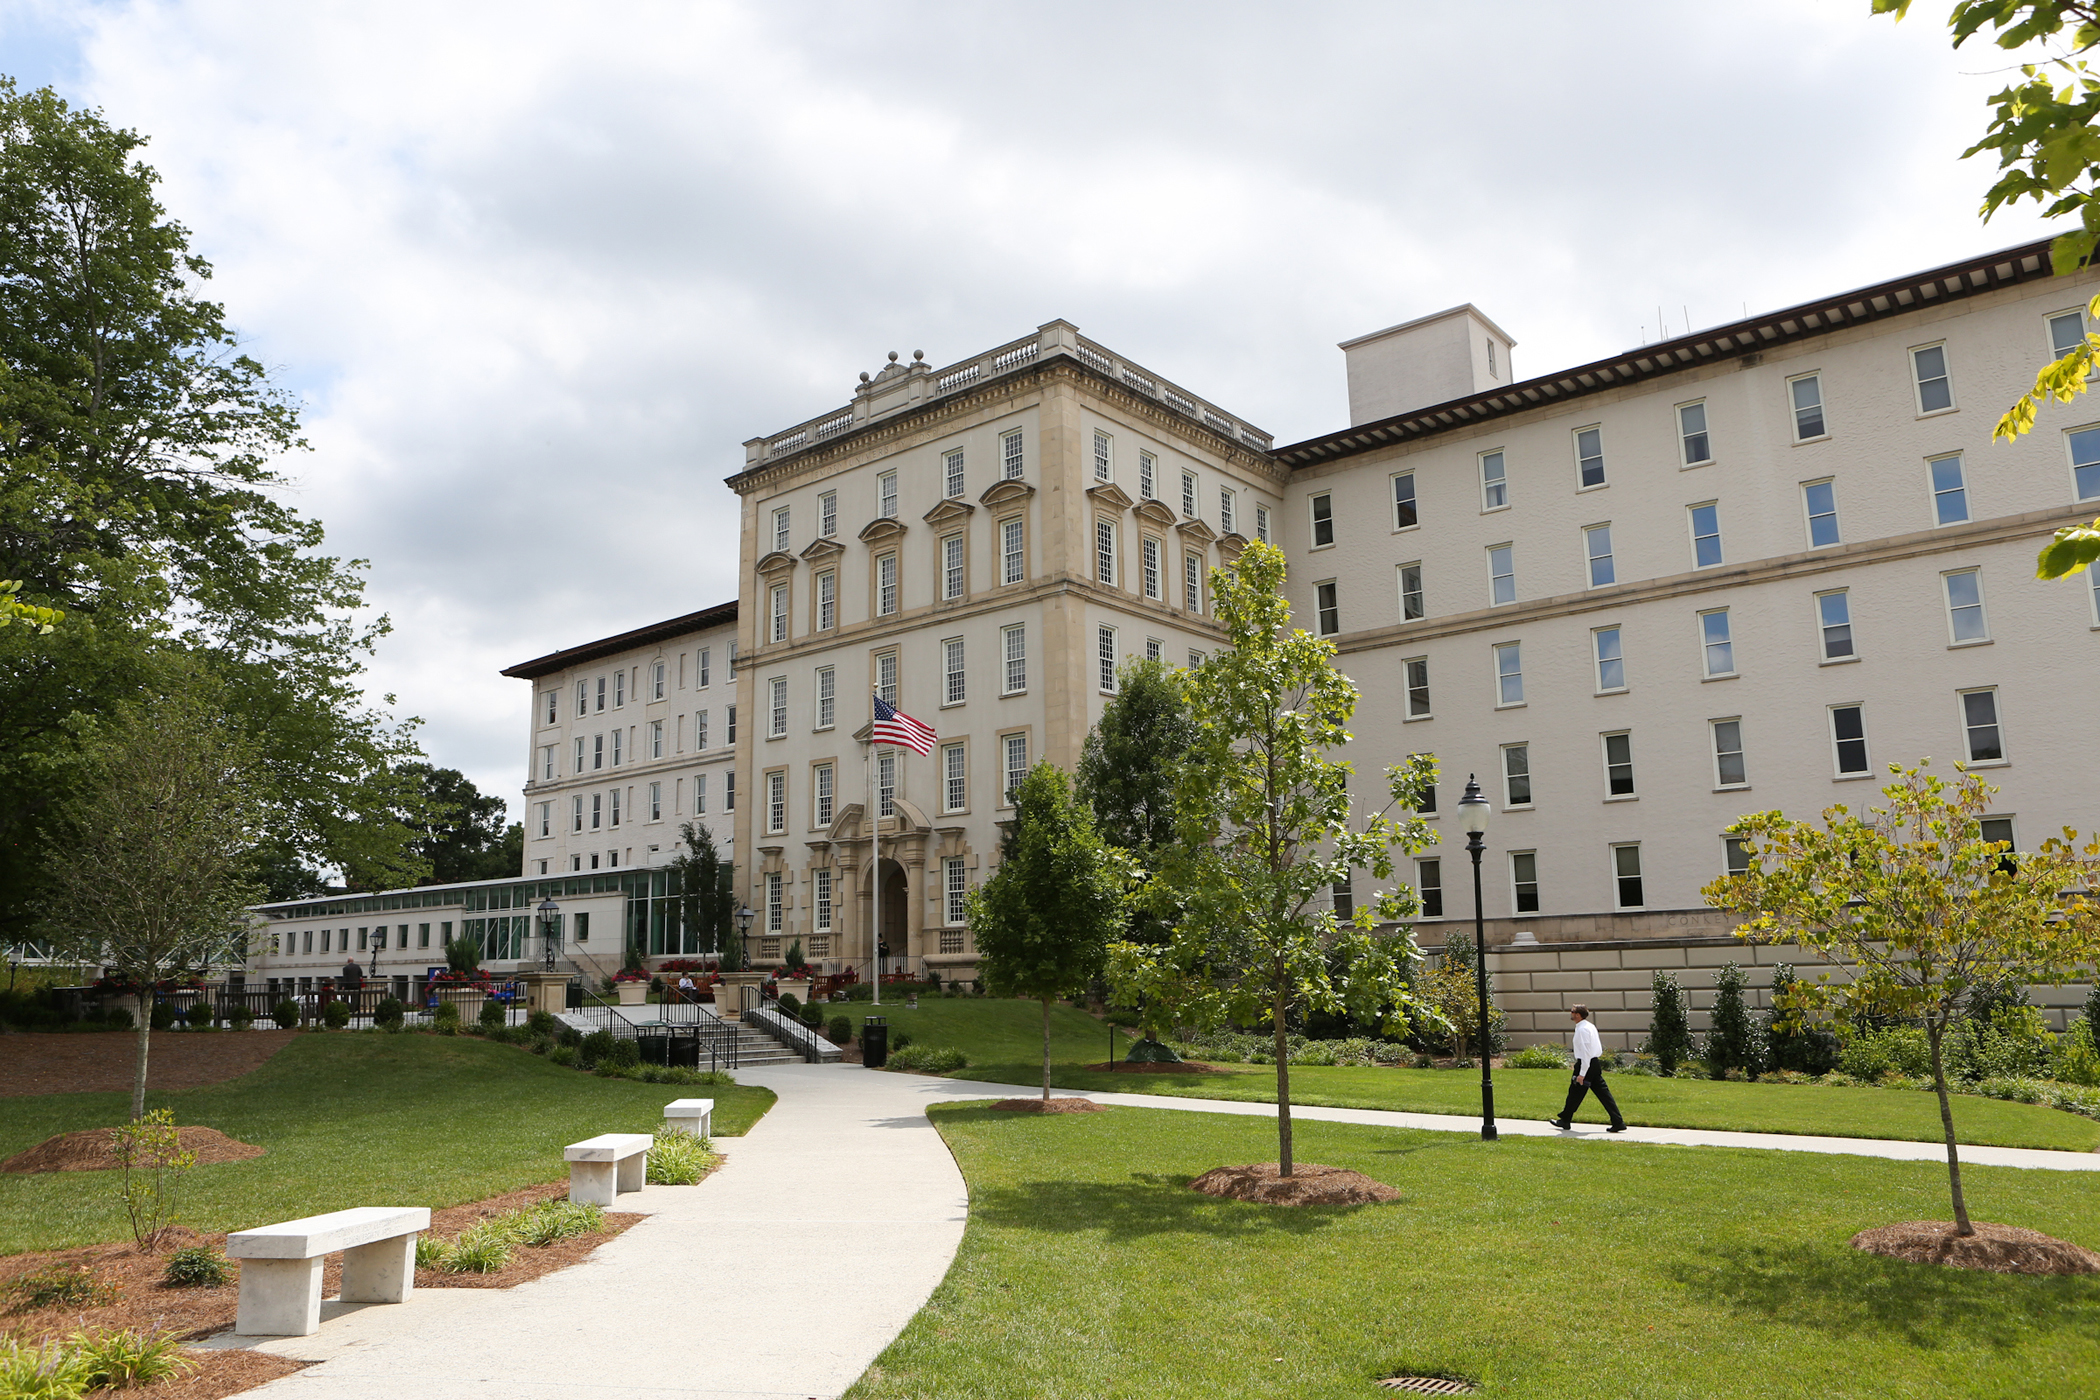 Emory University Hospital in Atlanta, seen in august 2014.